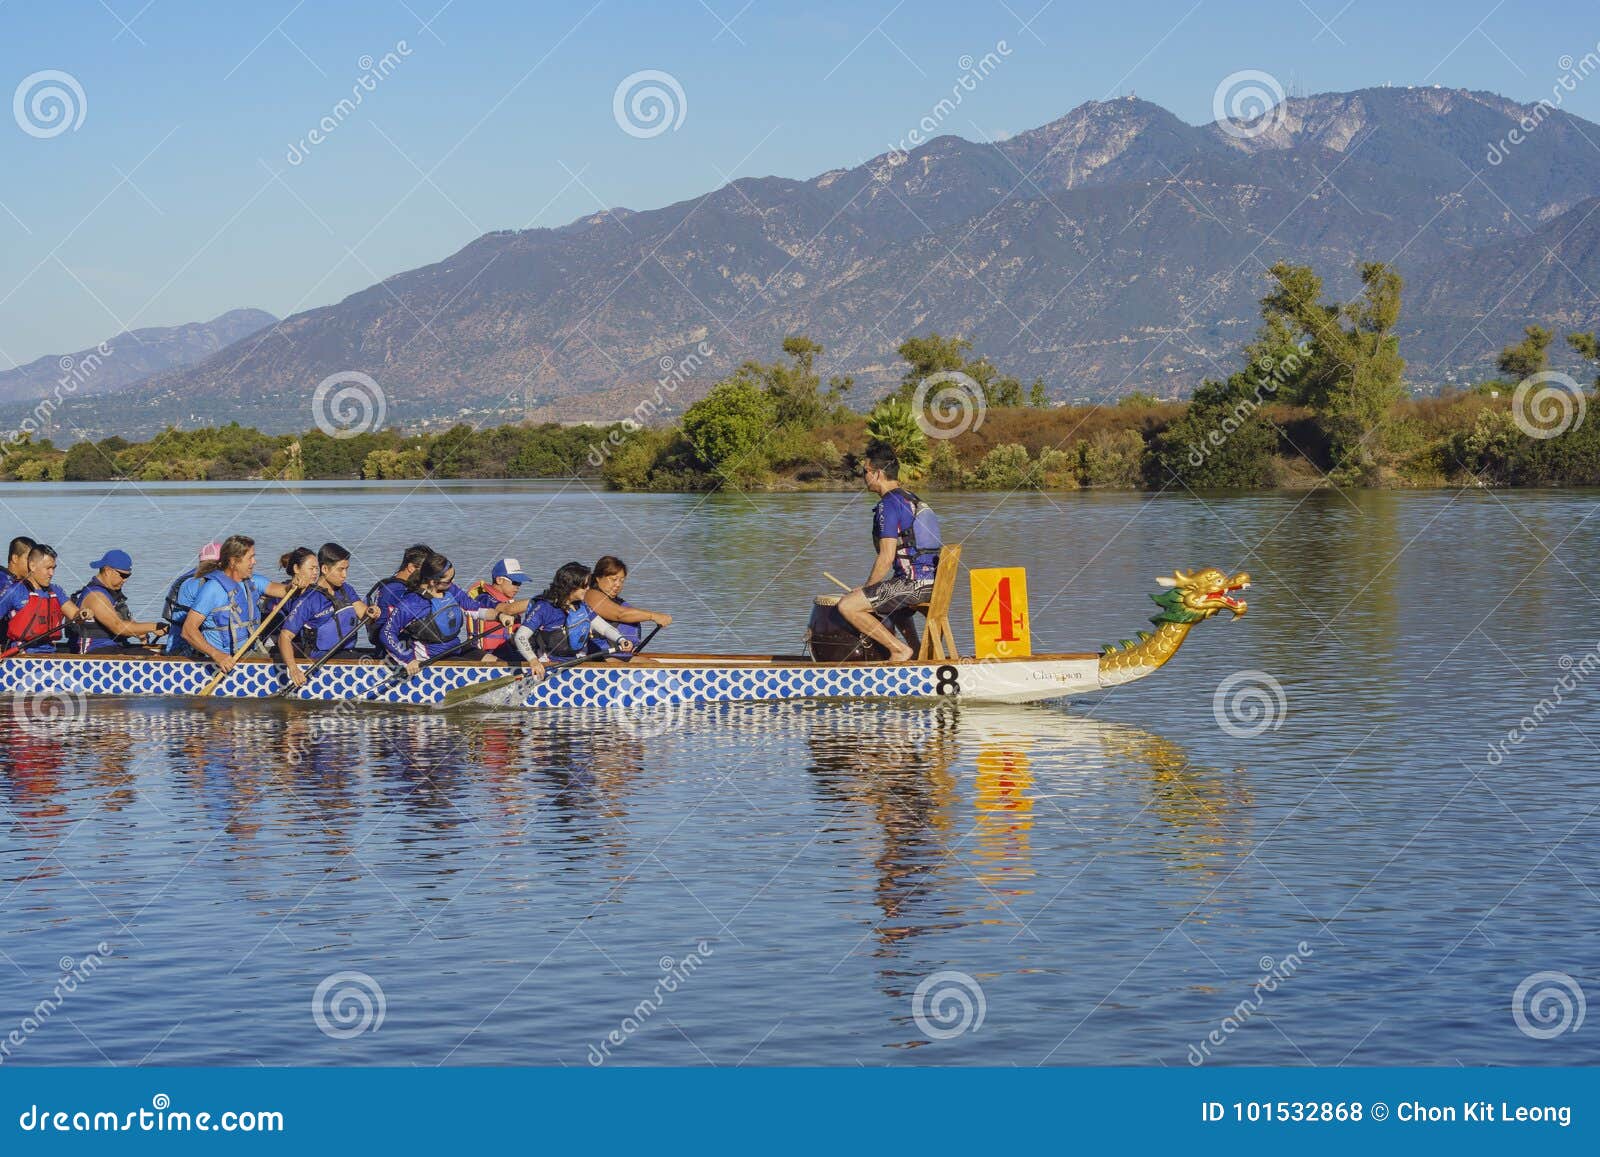 Dragon Boat Festival at Santa Fe Dam Recreation Area Editorial Stock